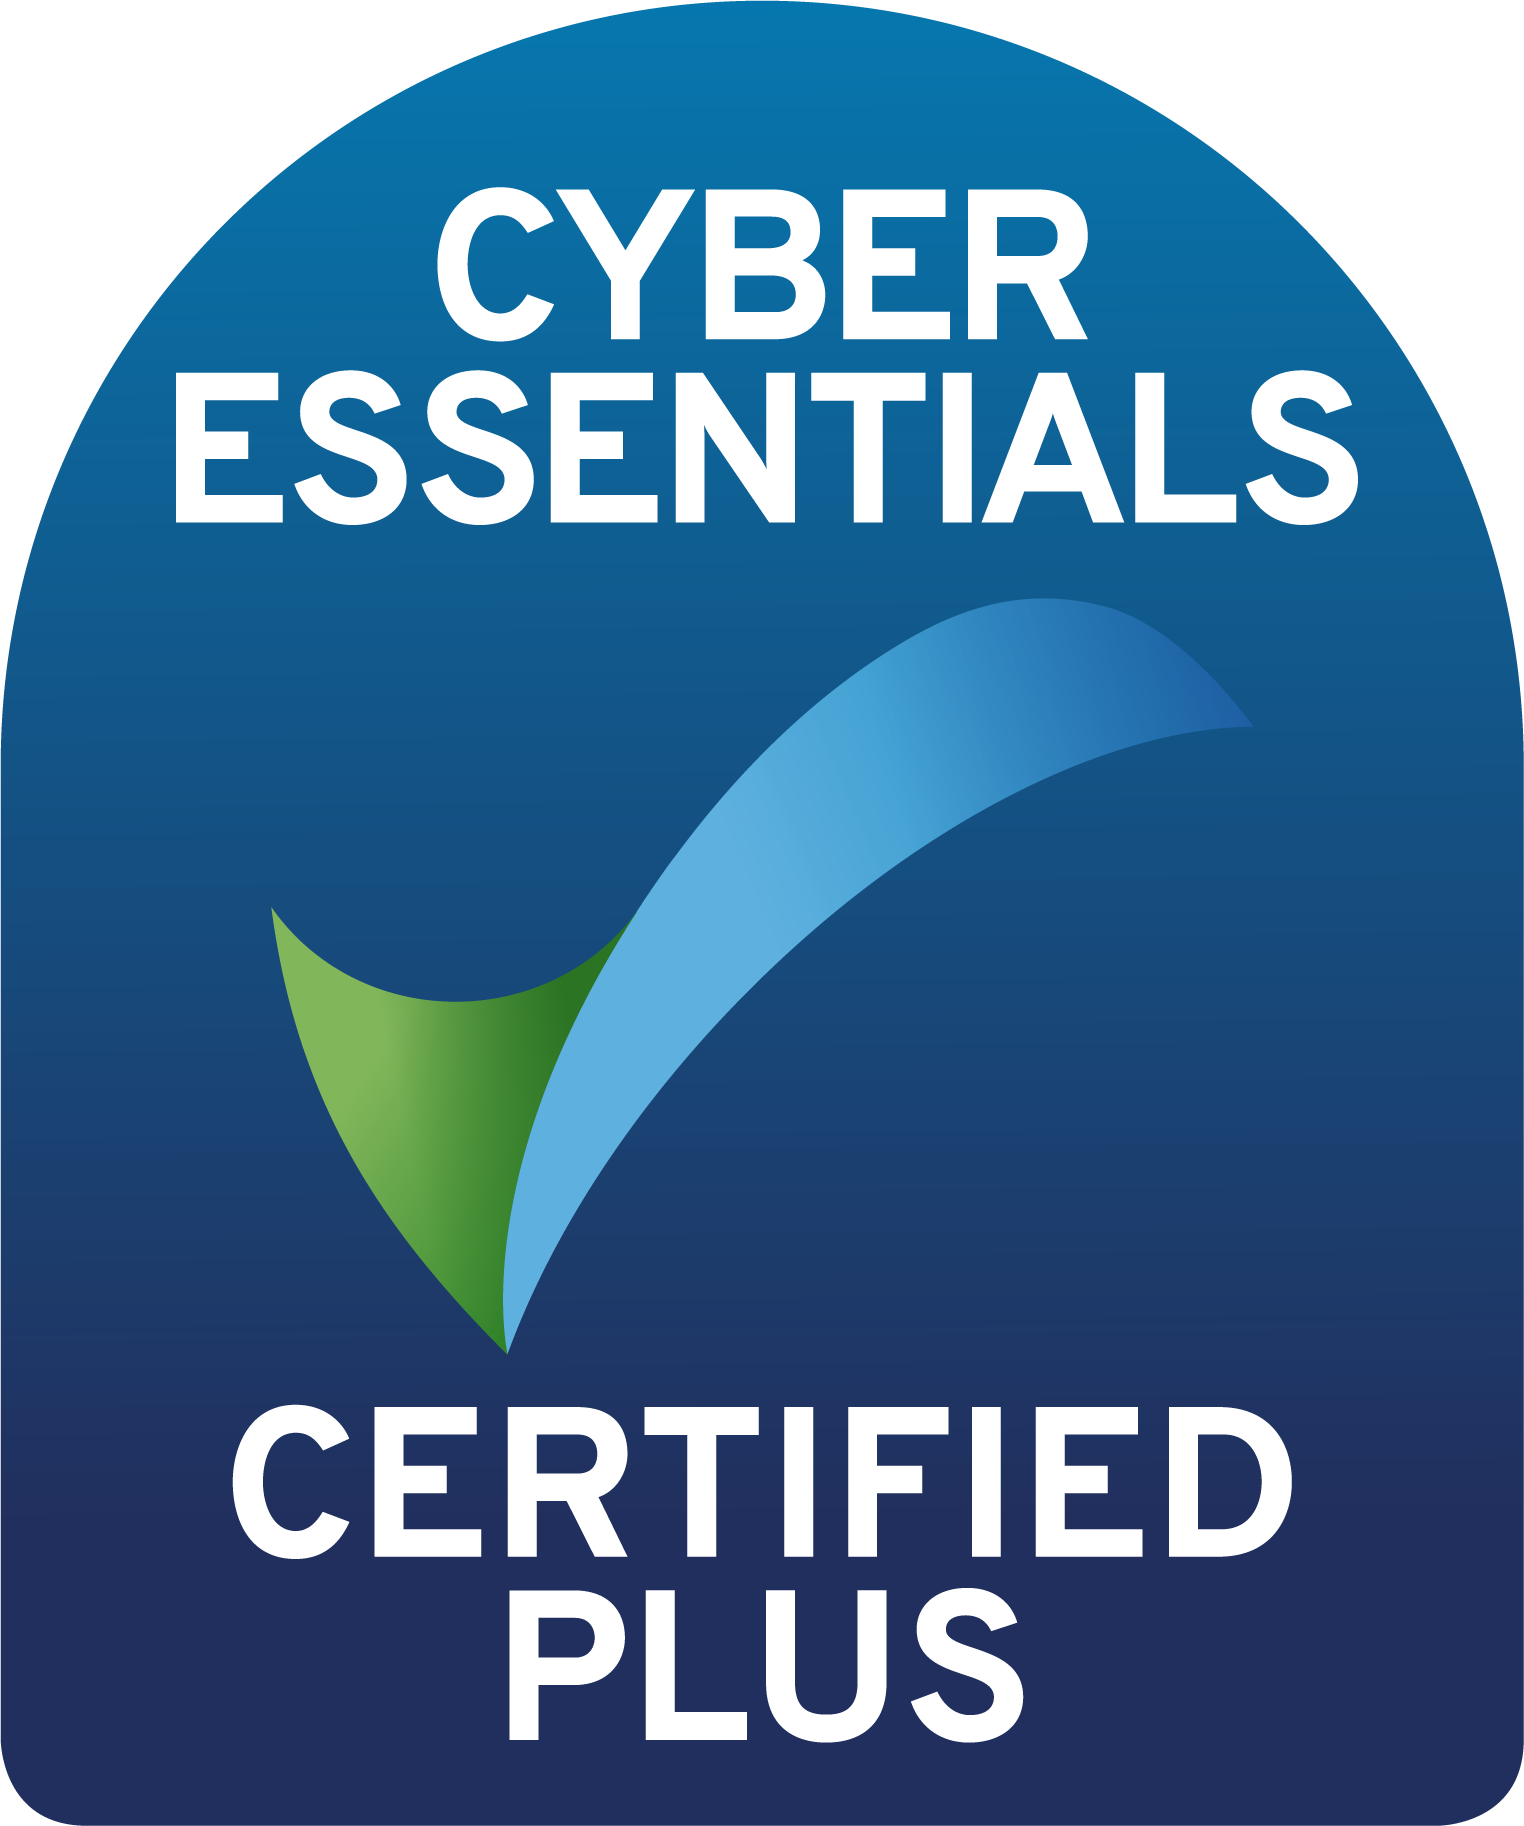 cyber essentials certification check mark